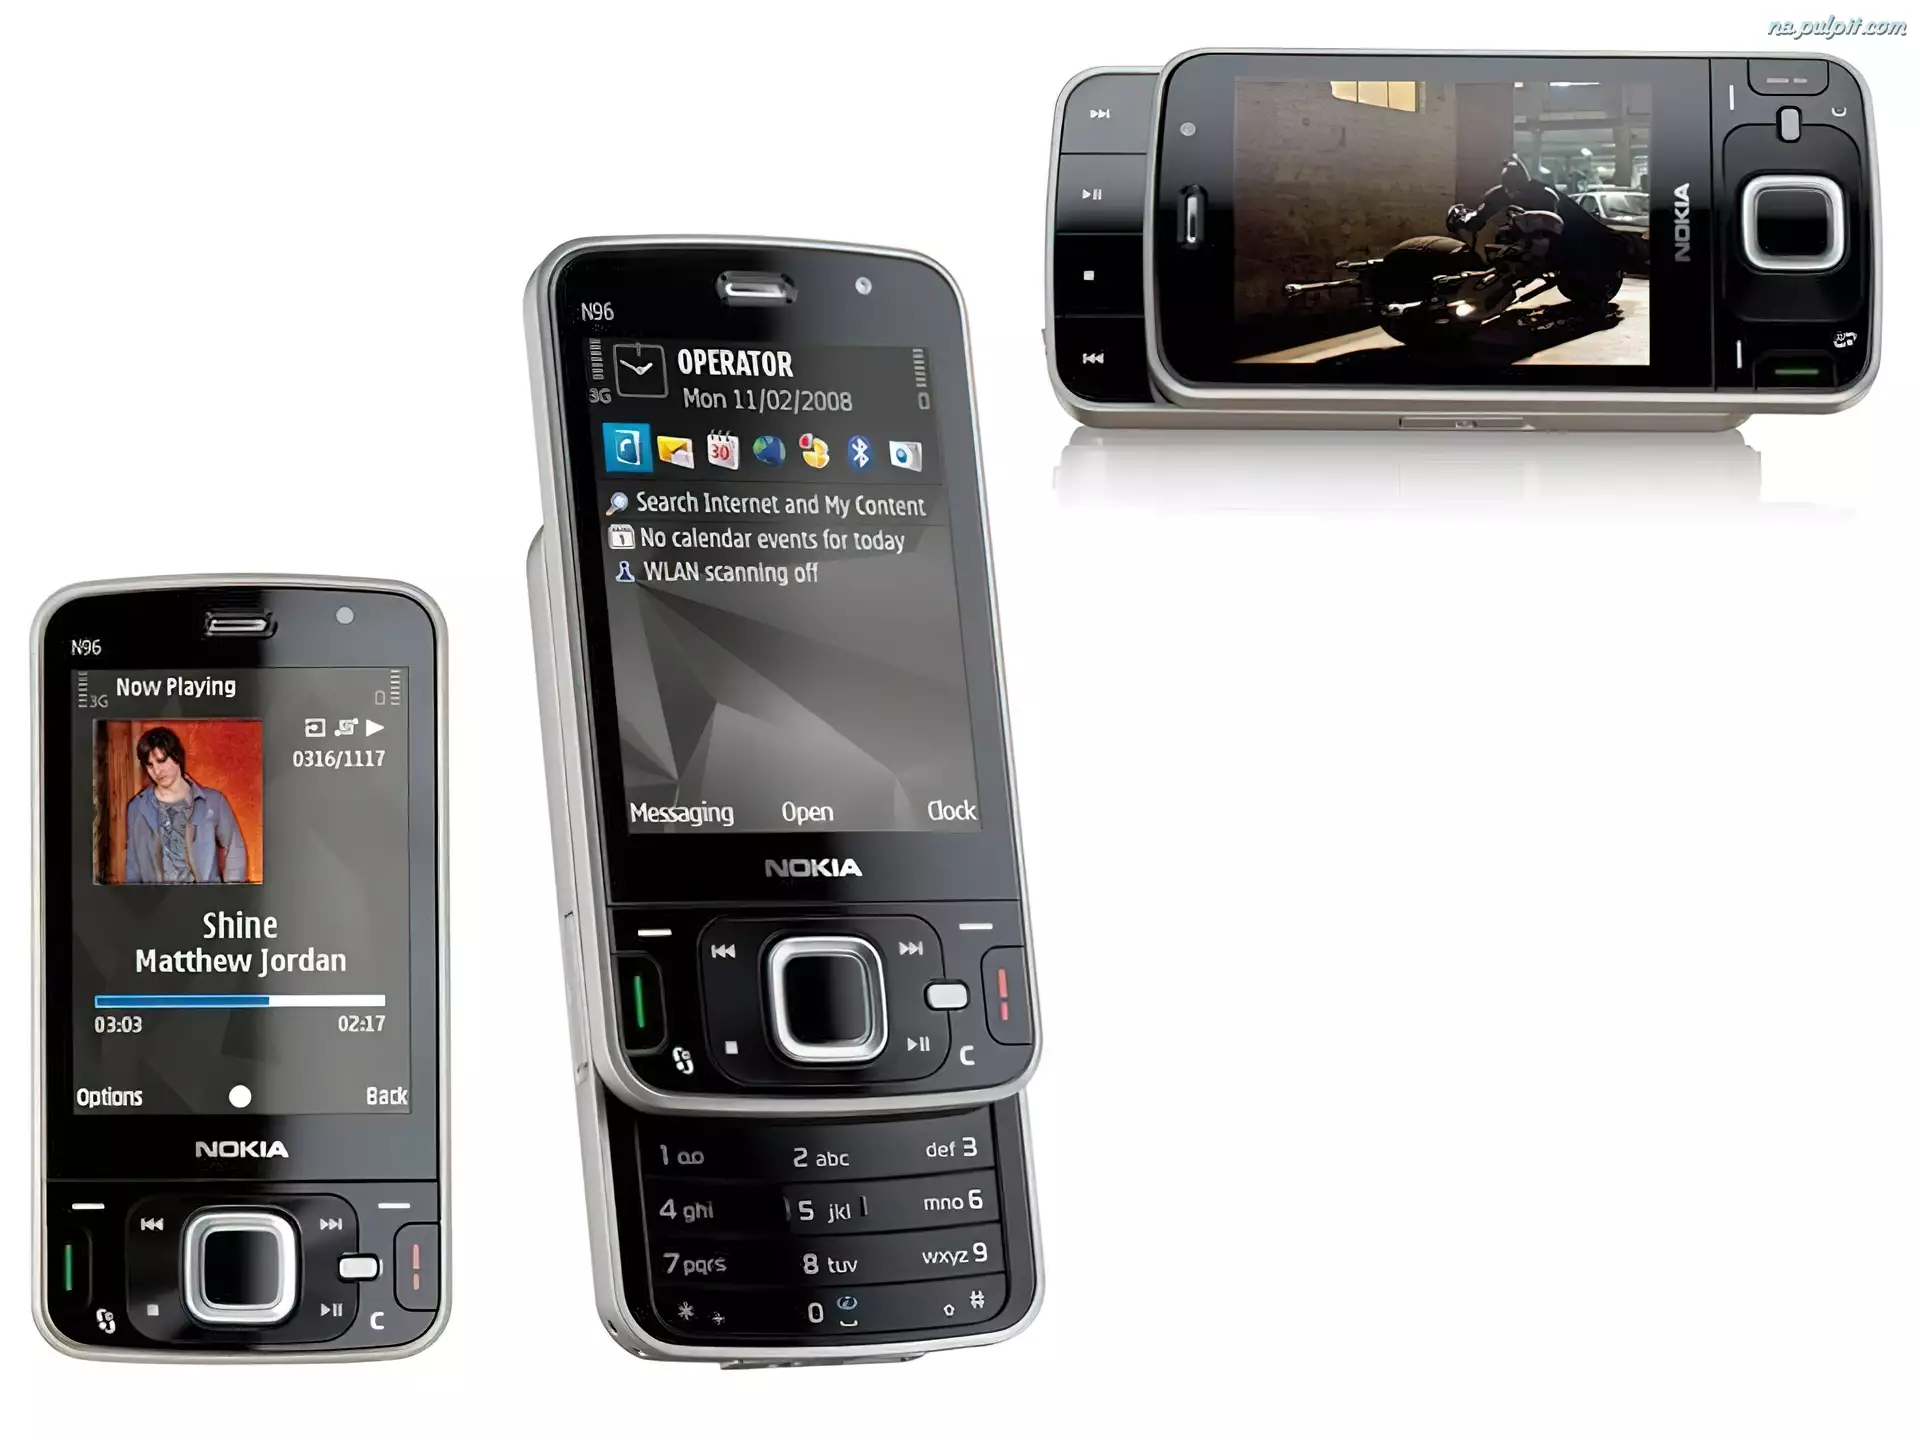 WLAN, Nokia N96, Batman, Shine